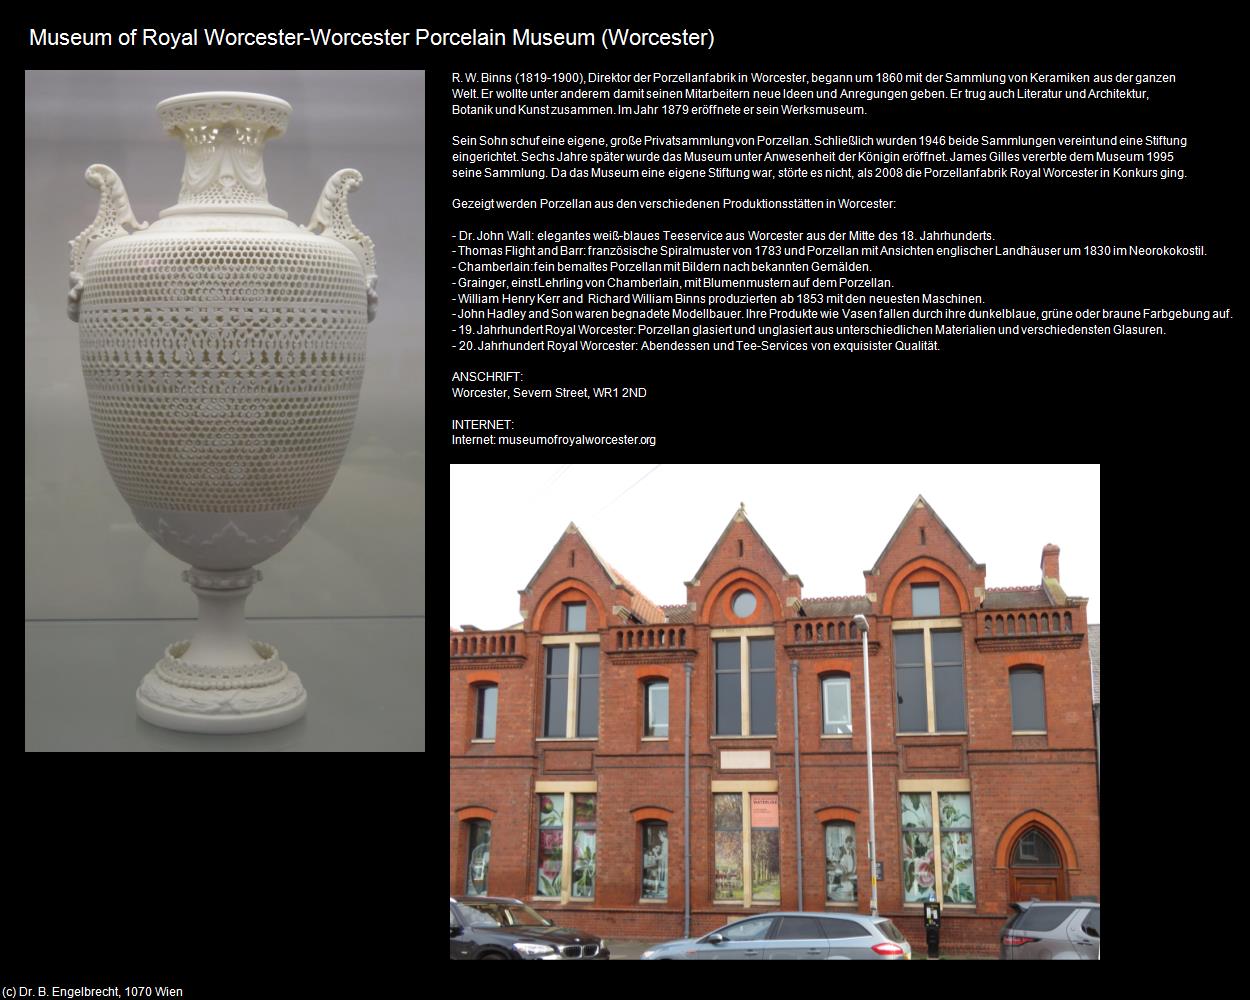 Museum of Royal Worcester-Worcester Porcelain Museum (Worcester, England) in Kulturatlas-ENGLAND und WALES